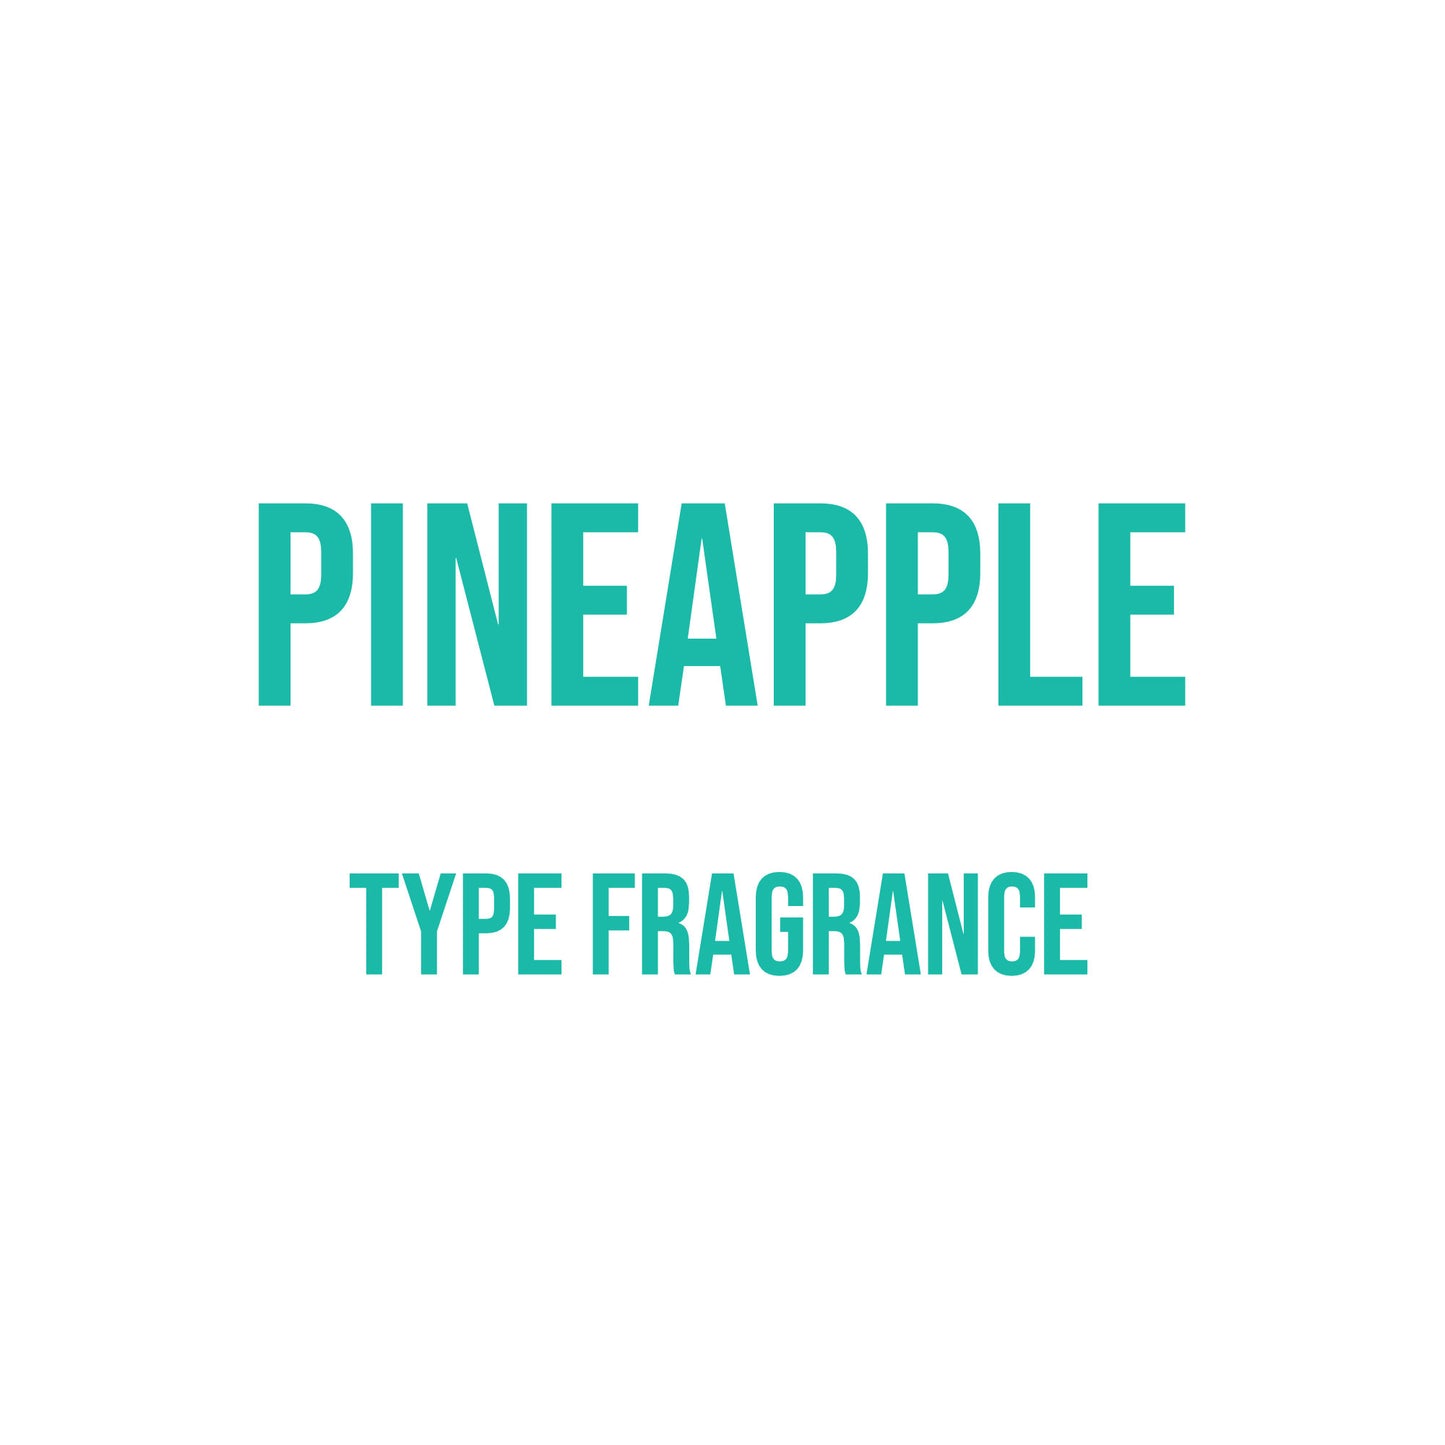 Pineapple Type Fragrance